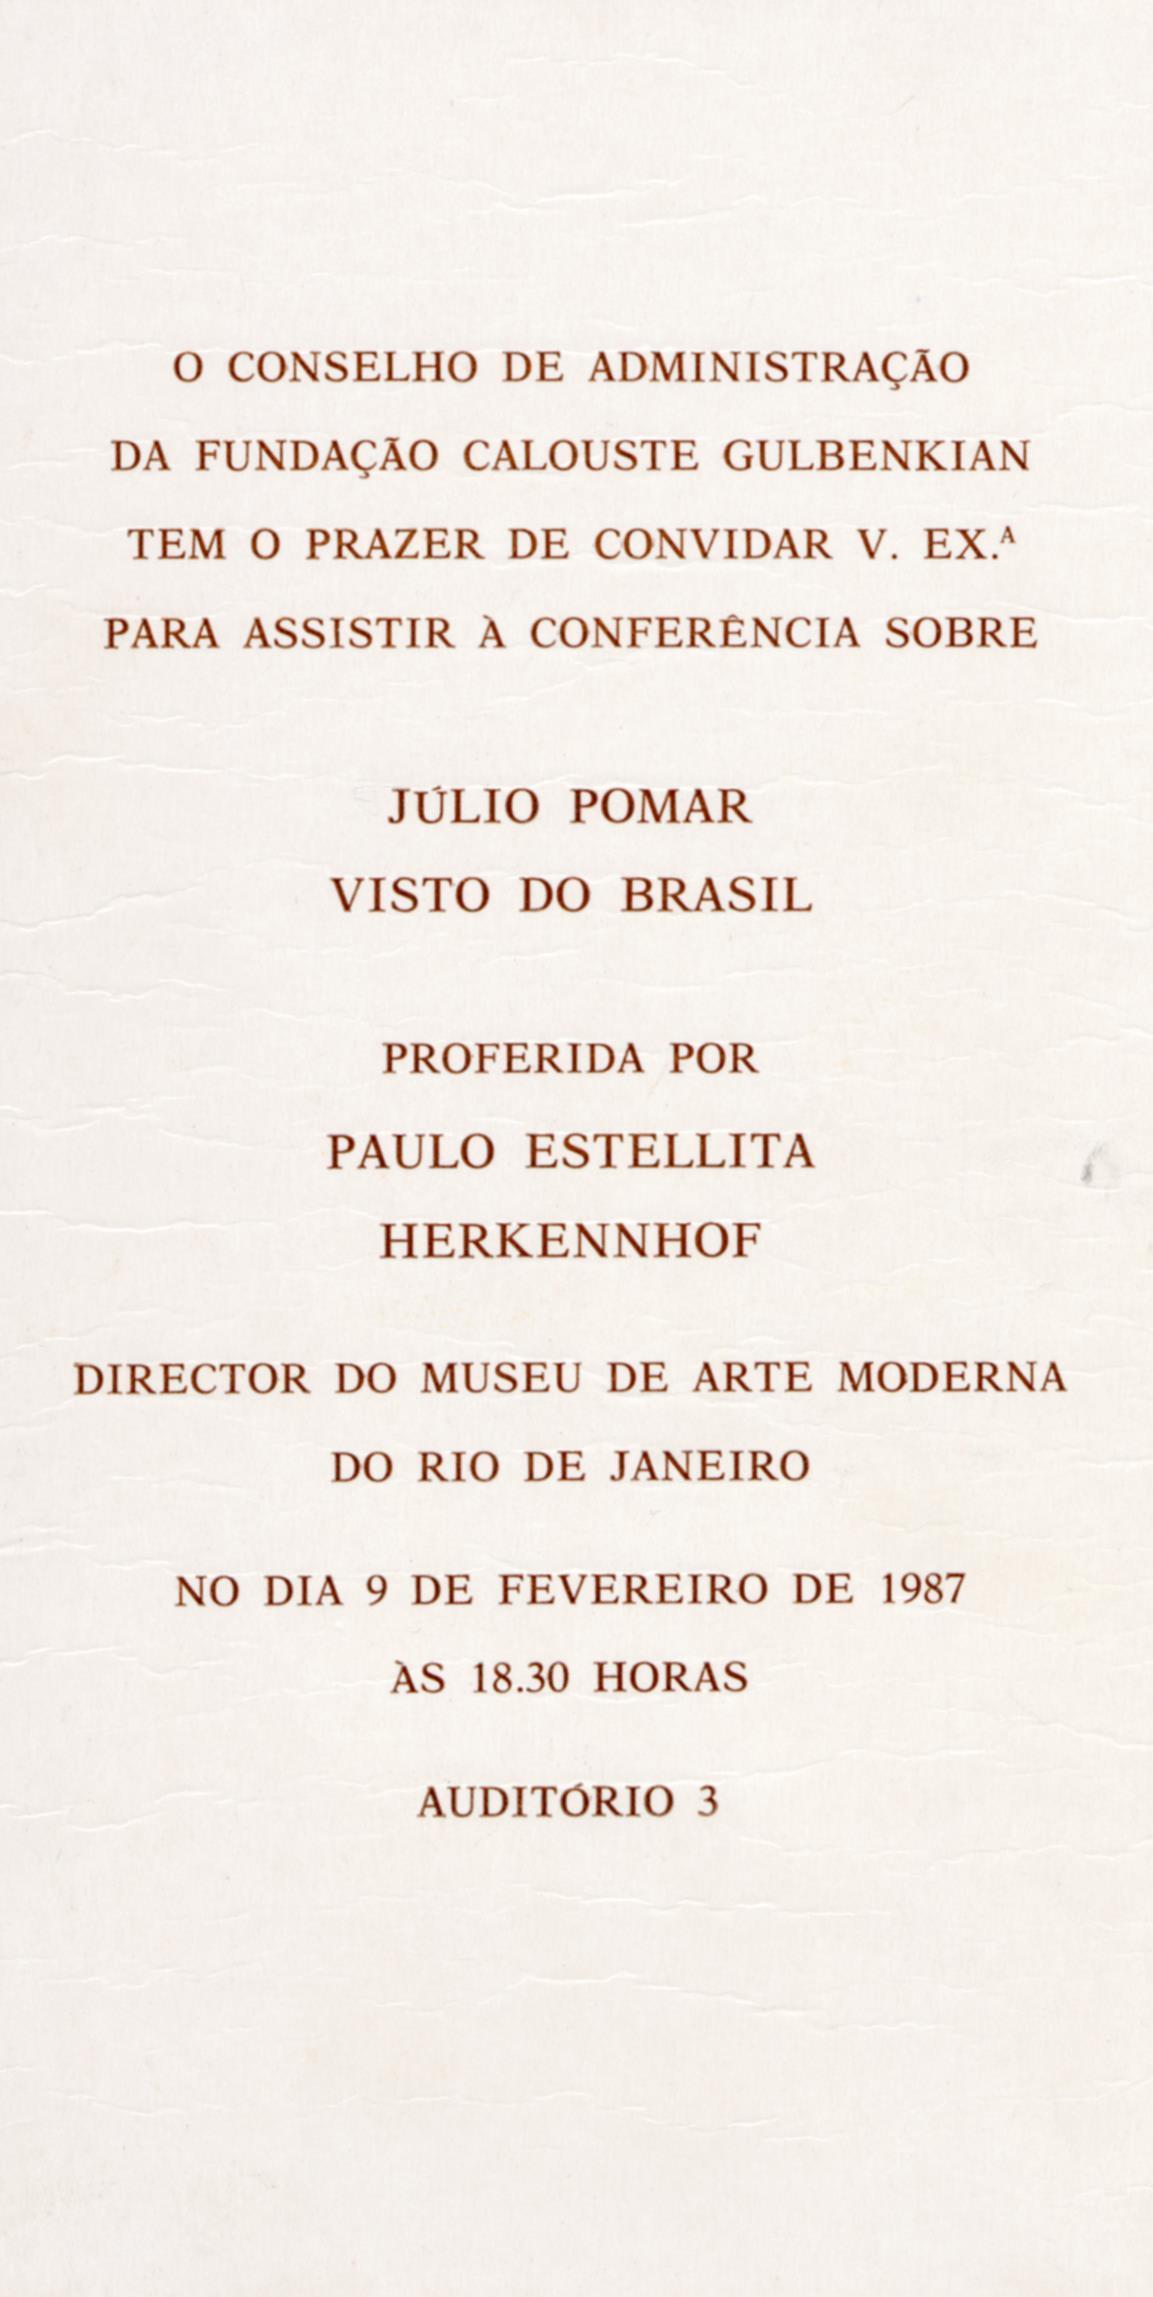 Júlio Pomar visto do Brasil [conferência por Paulo Estellita Herkennhof]